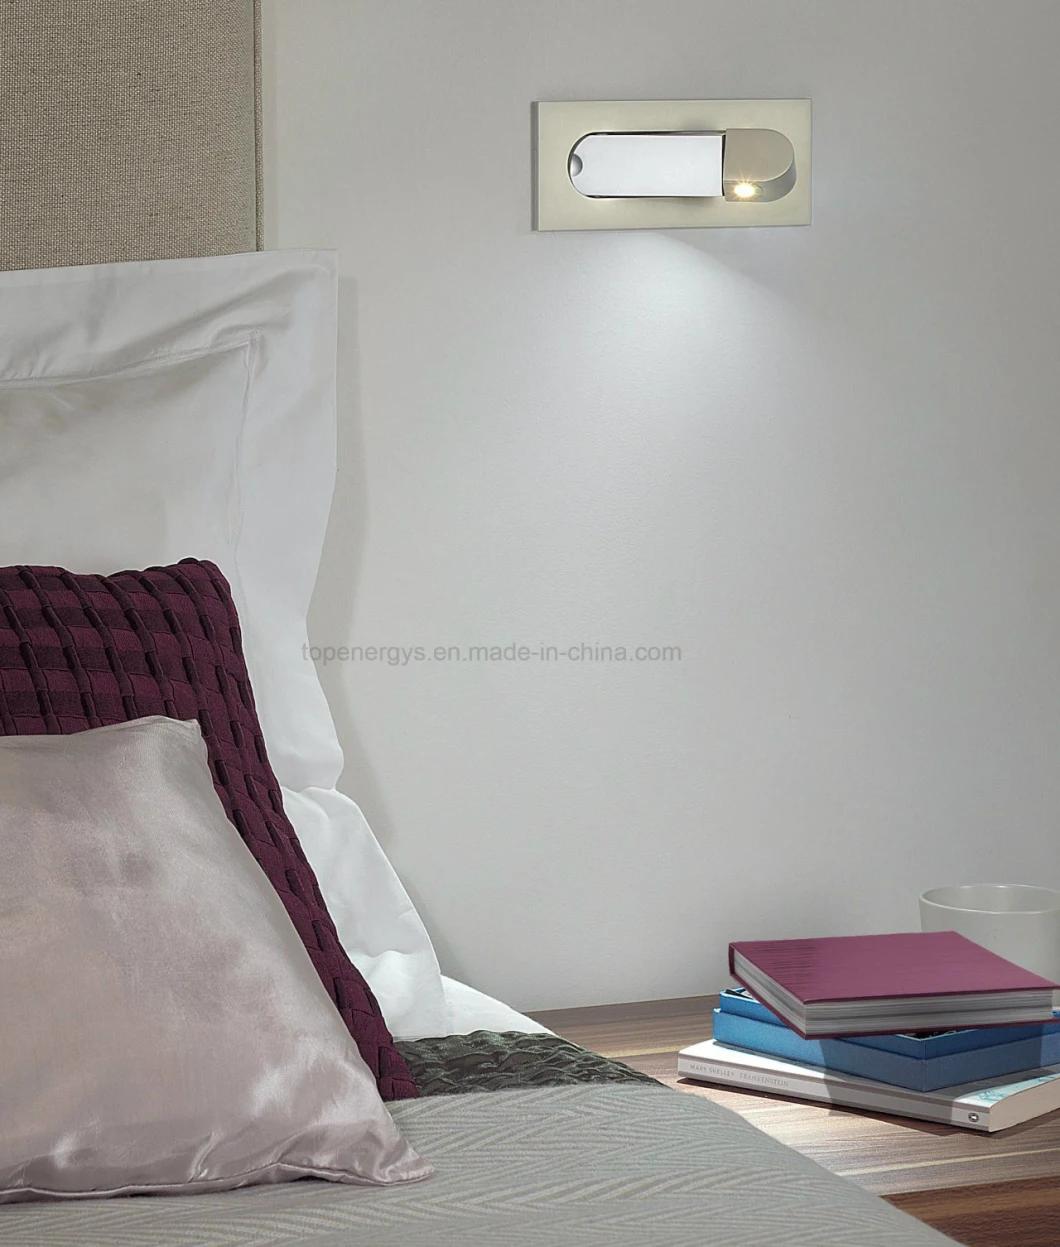 Rotatable LED Wall Lamp Bh-014 Decorative Adjustable Headboard Light Hotel Bedside Reading Light